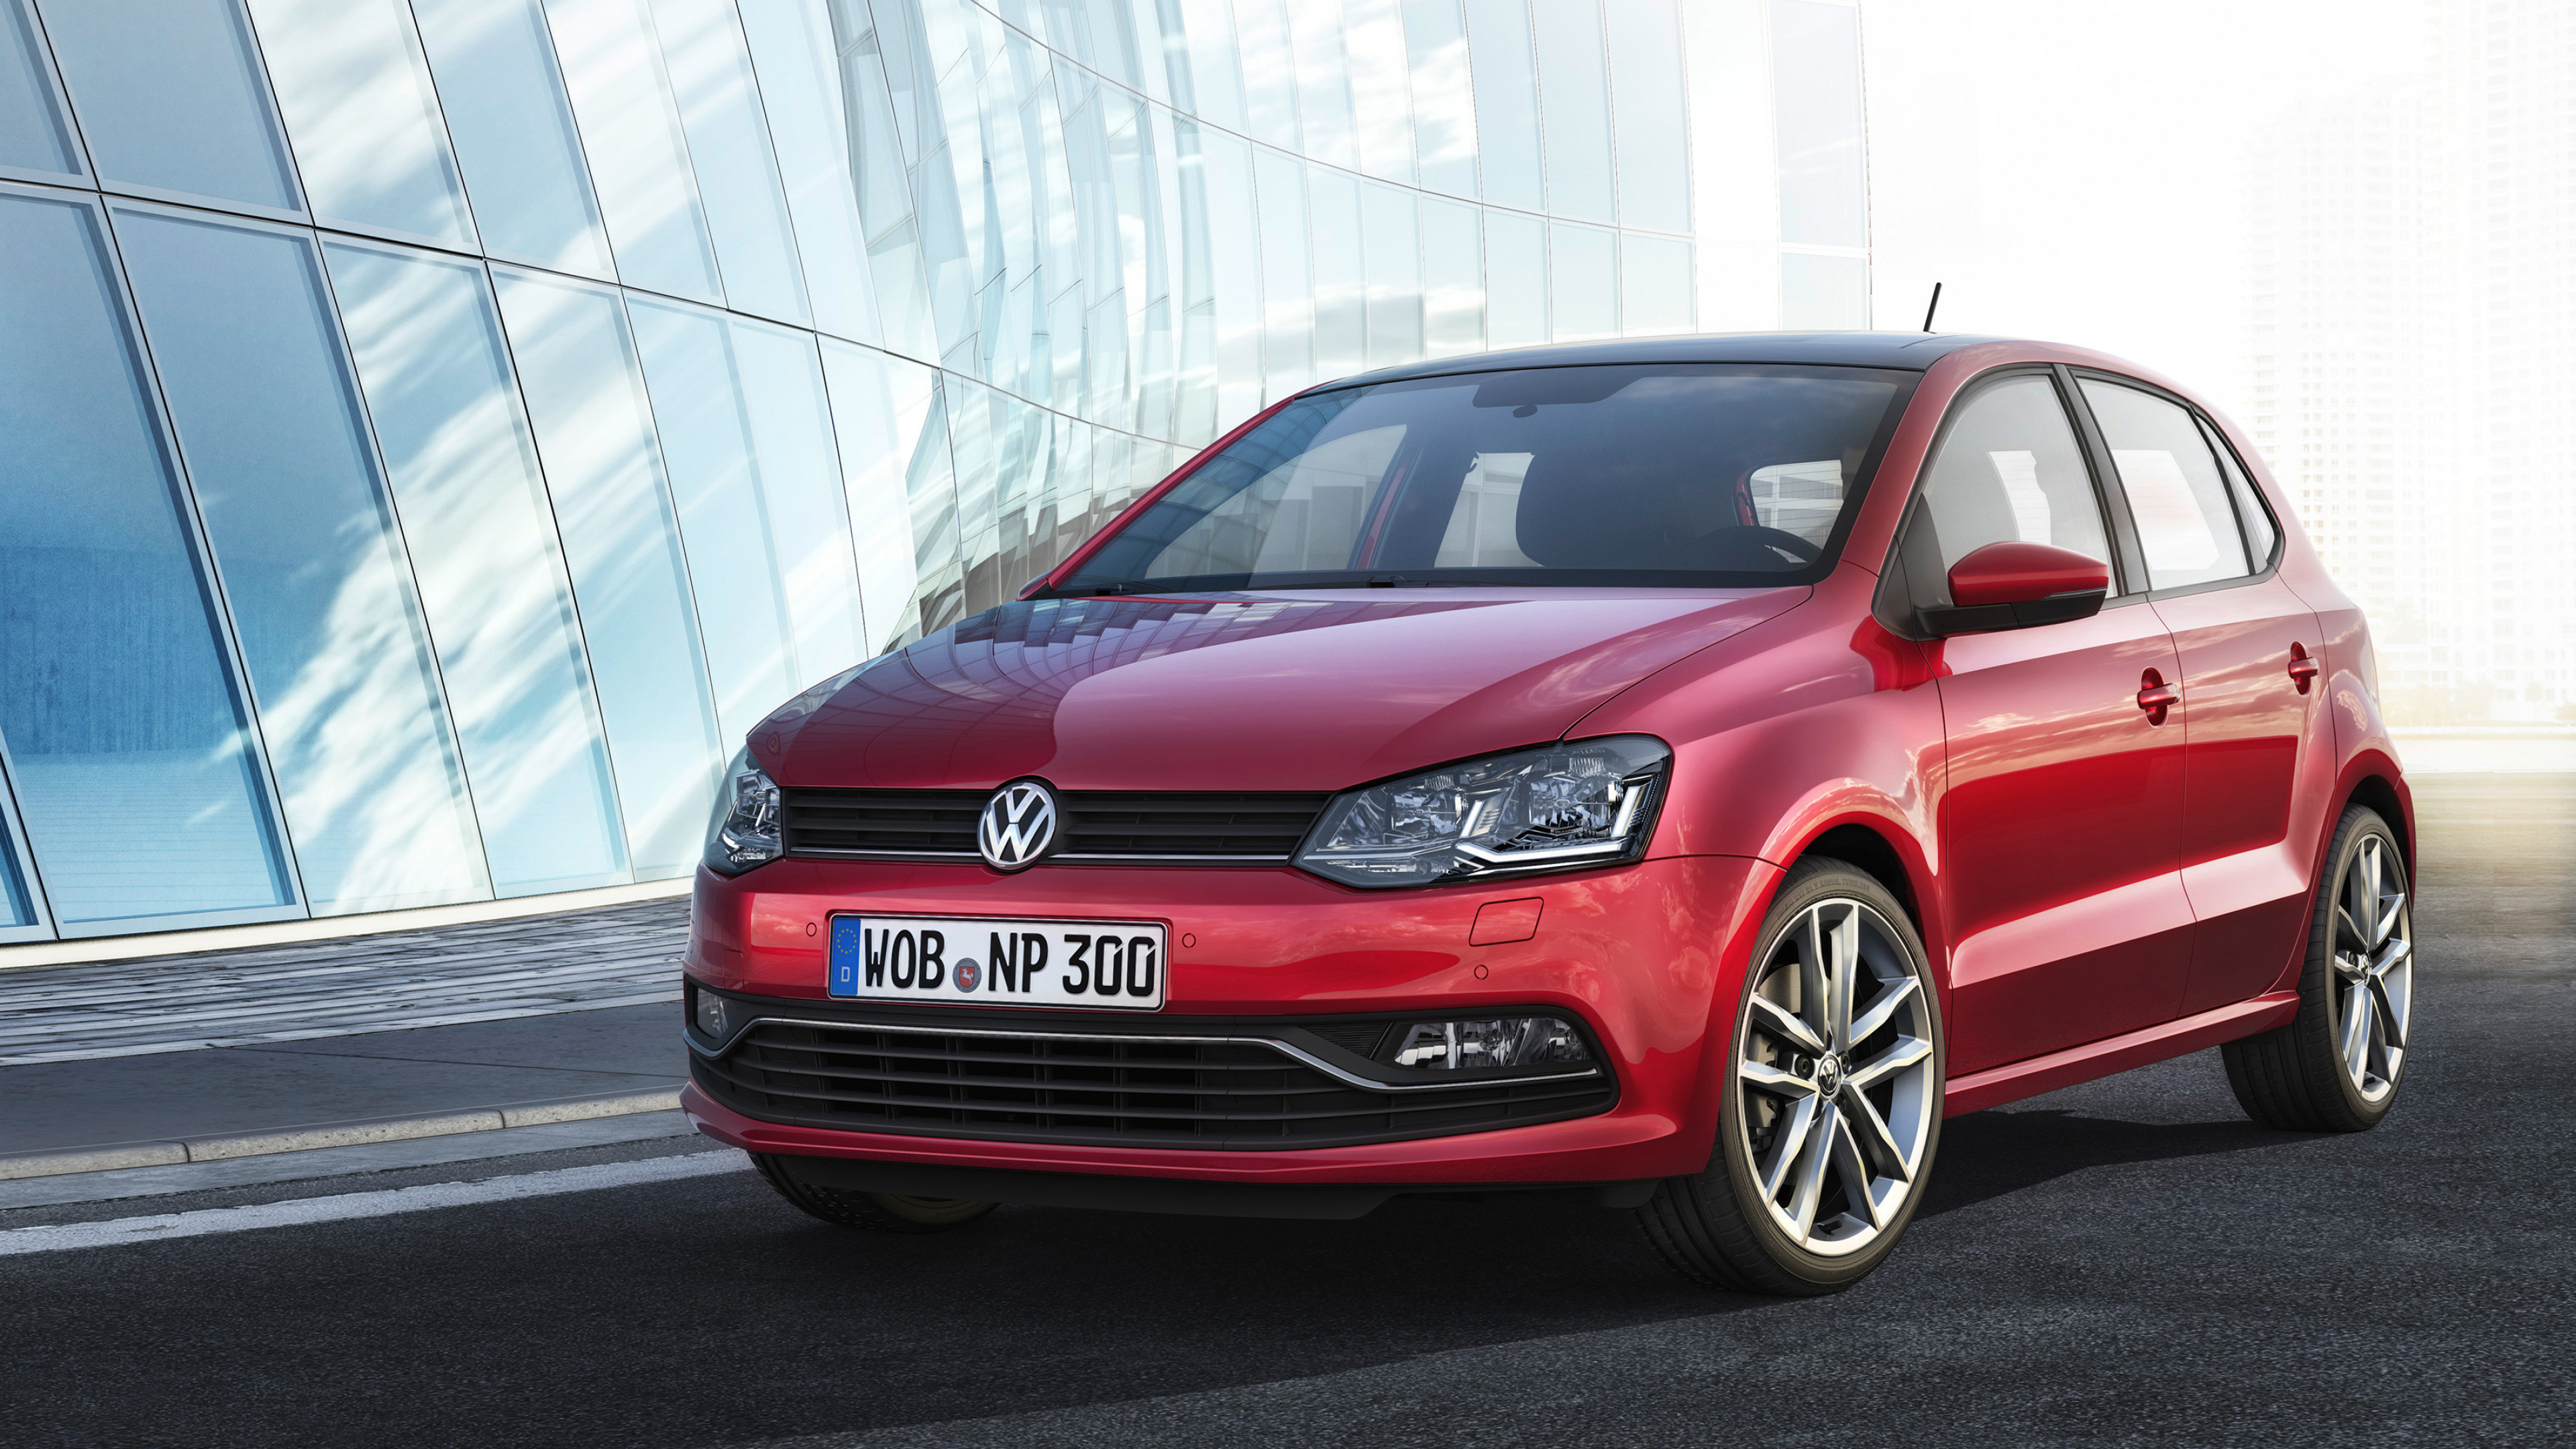 Volkswagen Polo, 4K Ultra HD, Automotive beauty, Compact performance, 3840x2160 4K Desktop